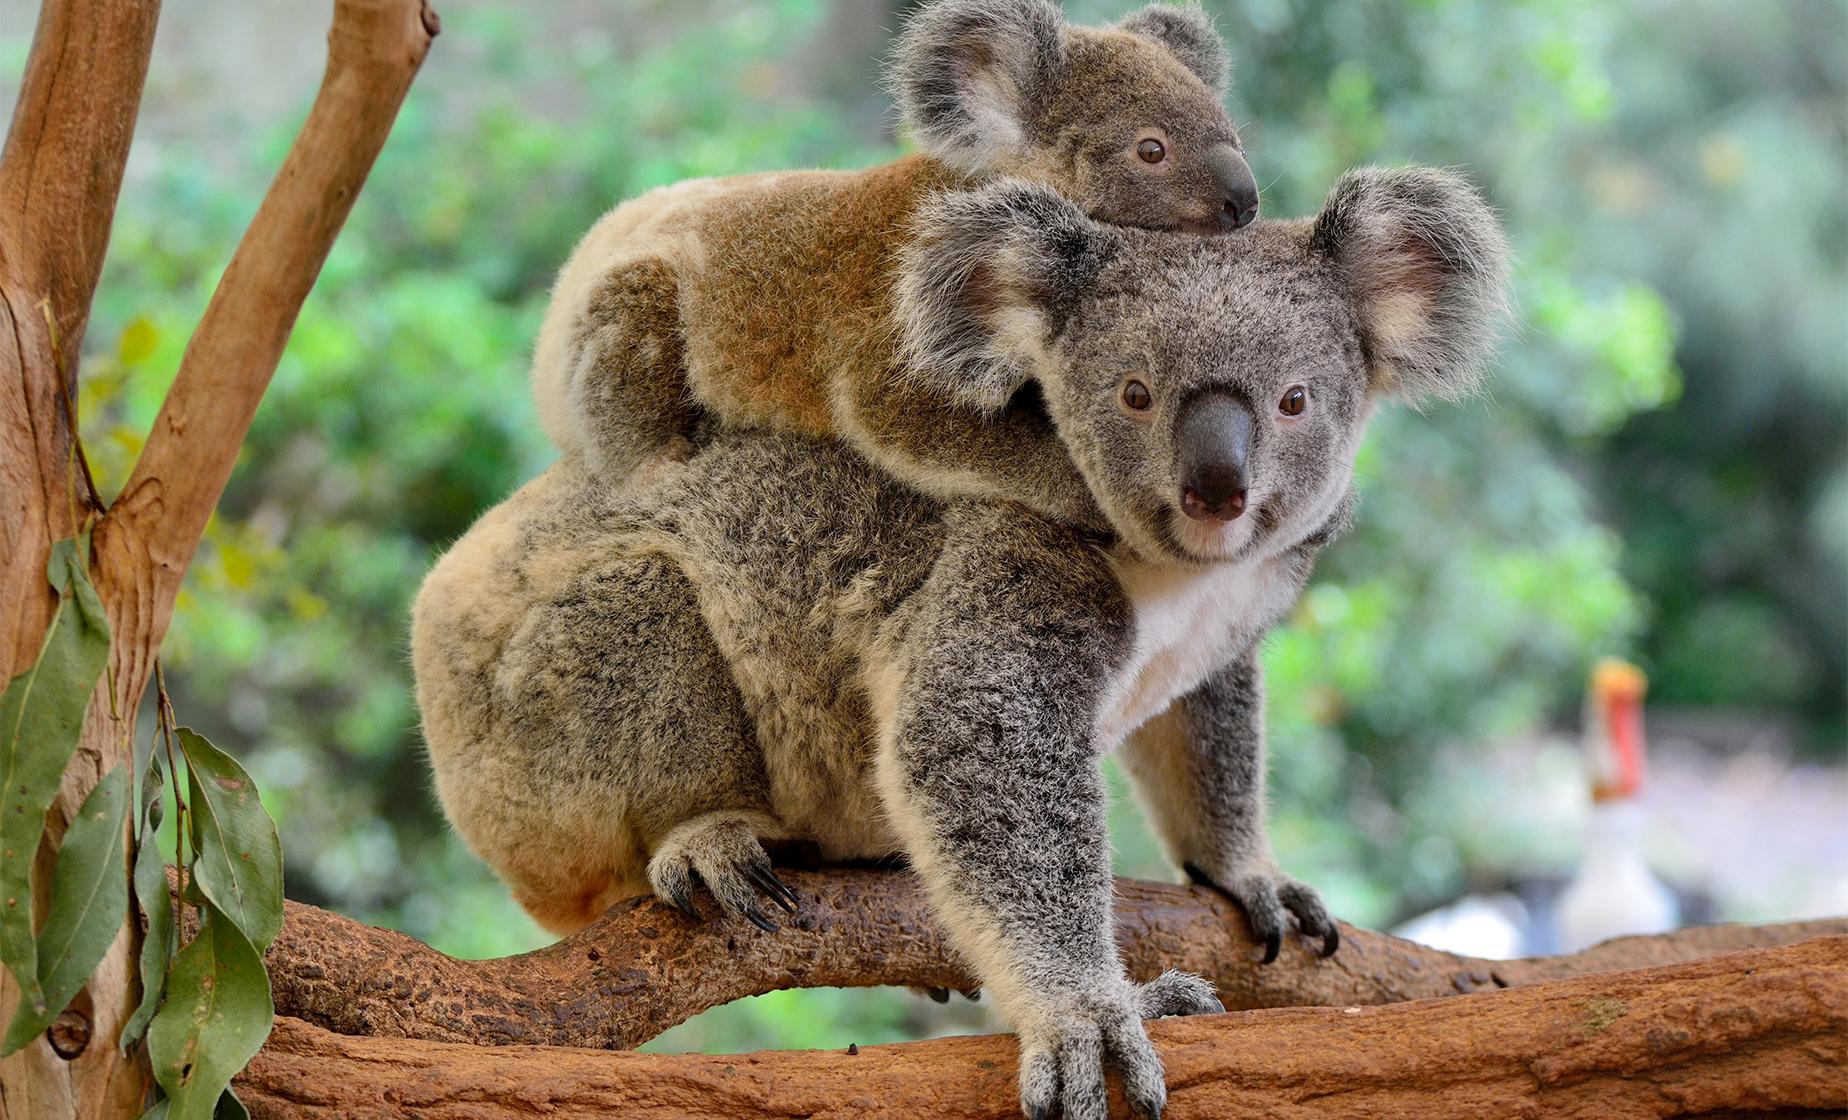 Lone Pine Koala Sanctuary and River Cruise in Brisbane